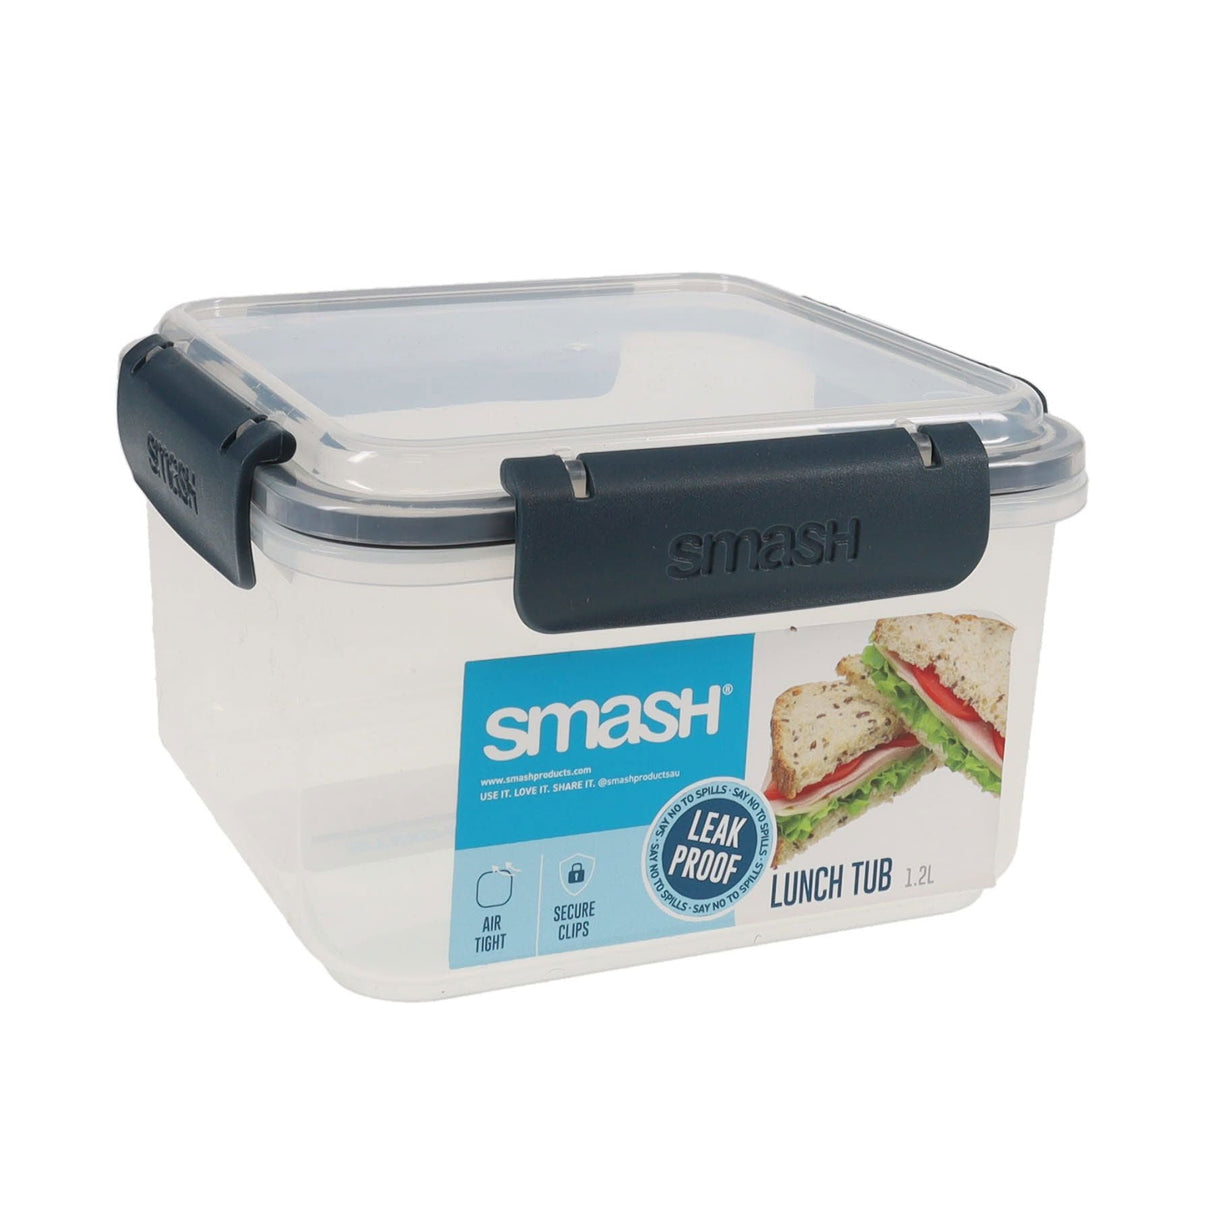 Smash Leakproof Lunch Box -1.25L - Black-Lunch Boxes-Smash|StationeryShop.co.uk